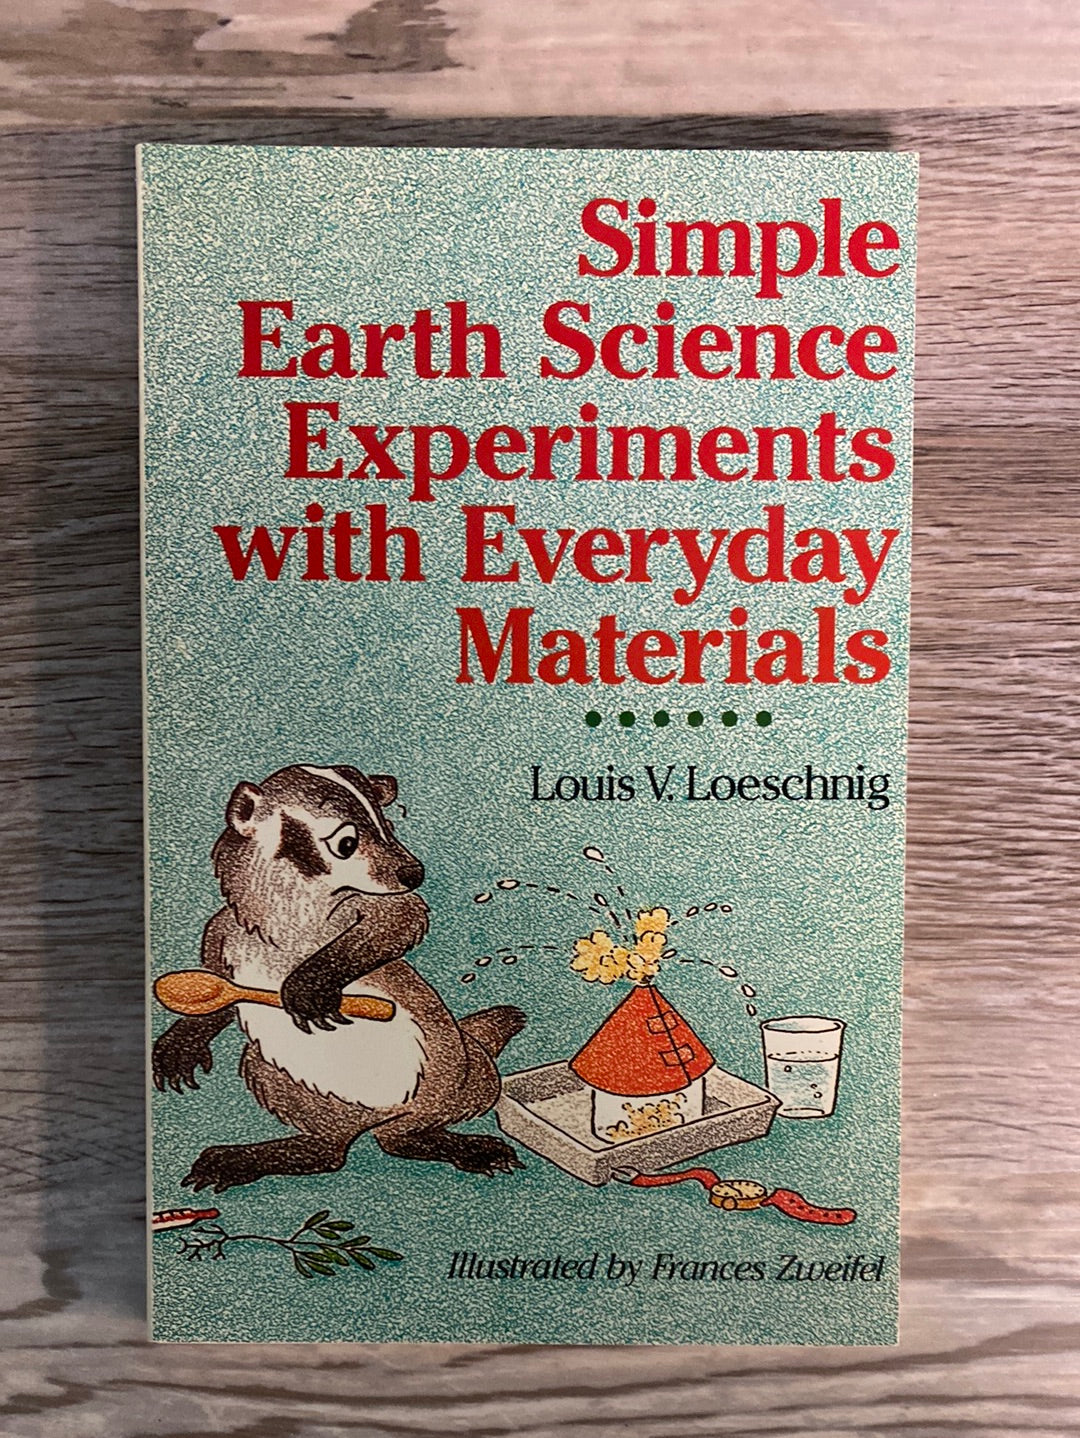 Simple Science Experiments 5 Book Set by Louis Loeschnig, Frances Zweifel